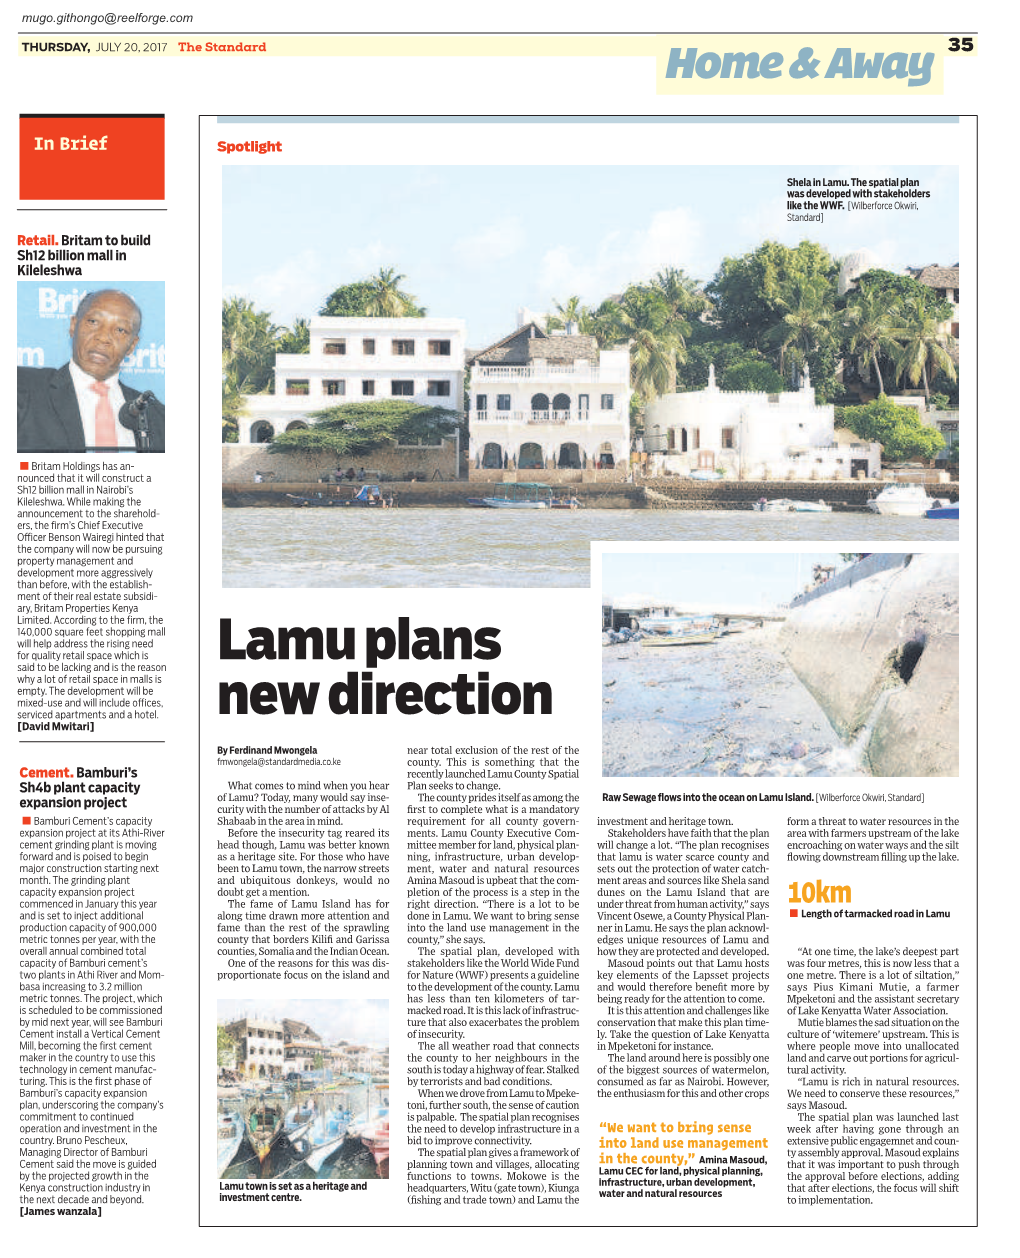 Lamu Plans New Direction